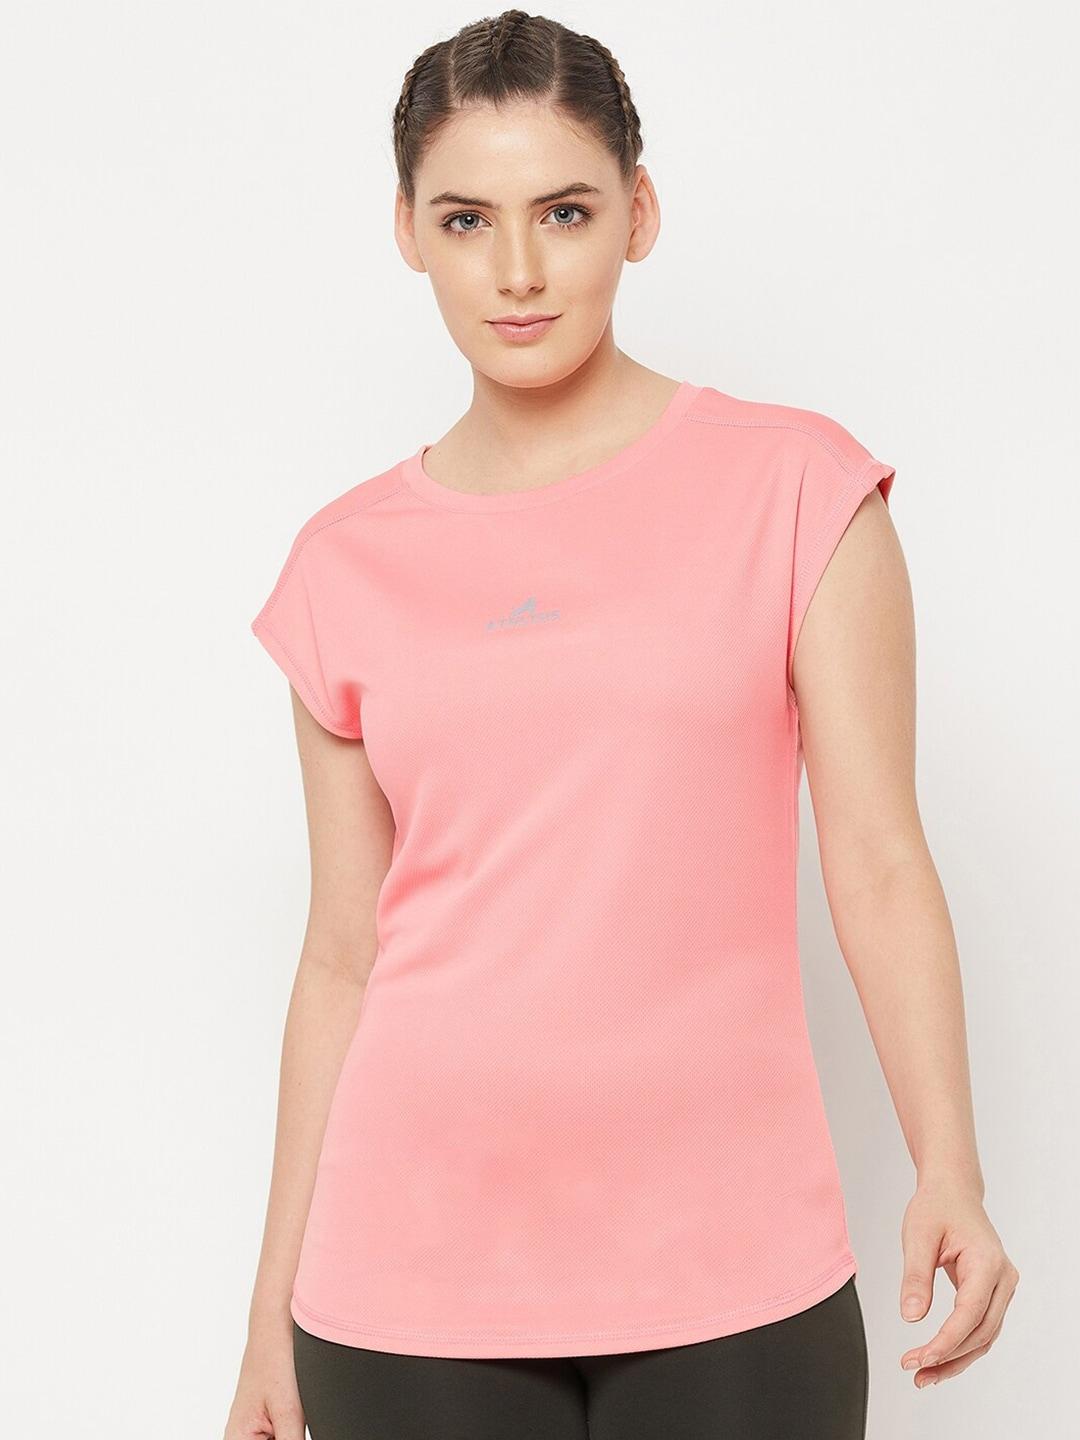 ATHLISIS Women Pink Slim Fit Quick Dry T-shirt